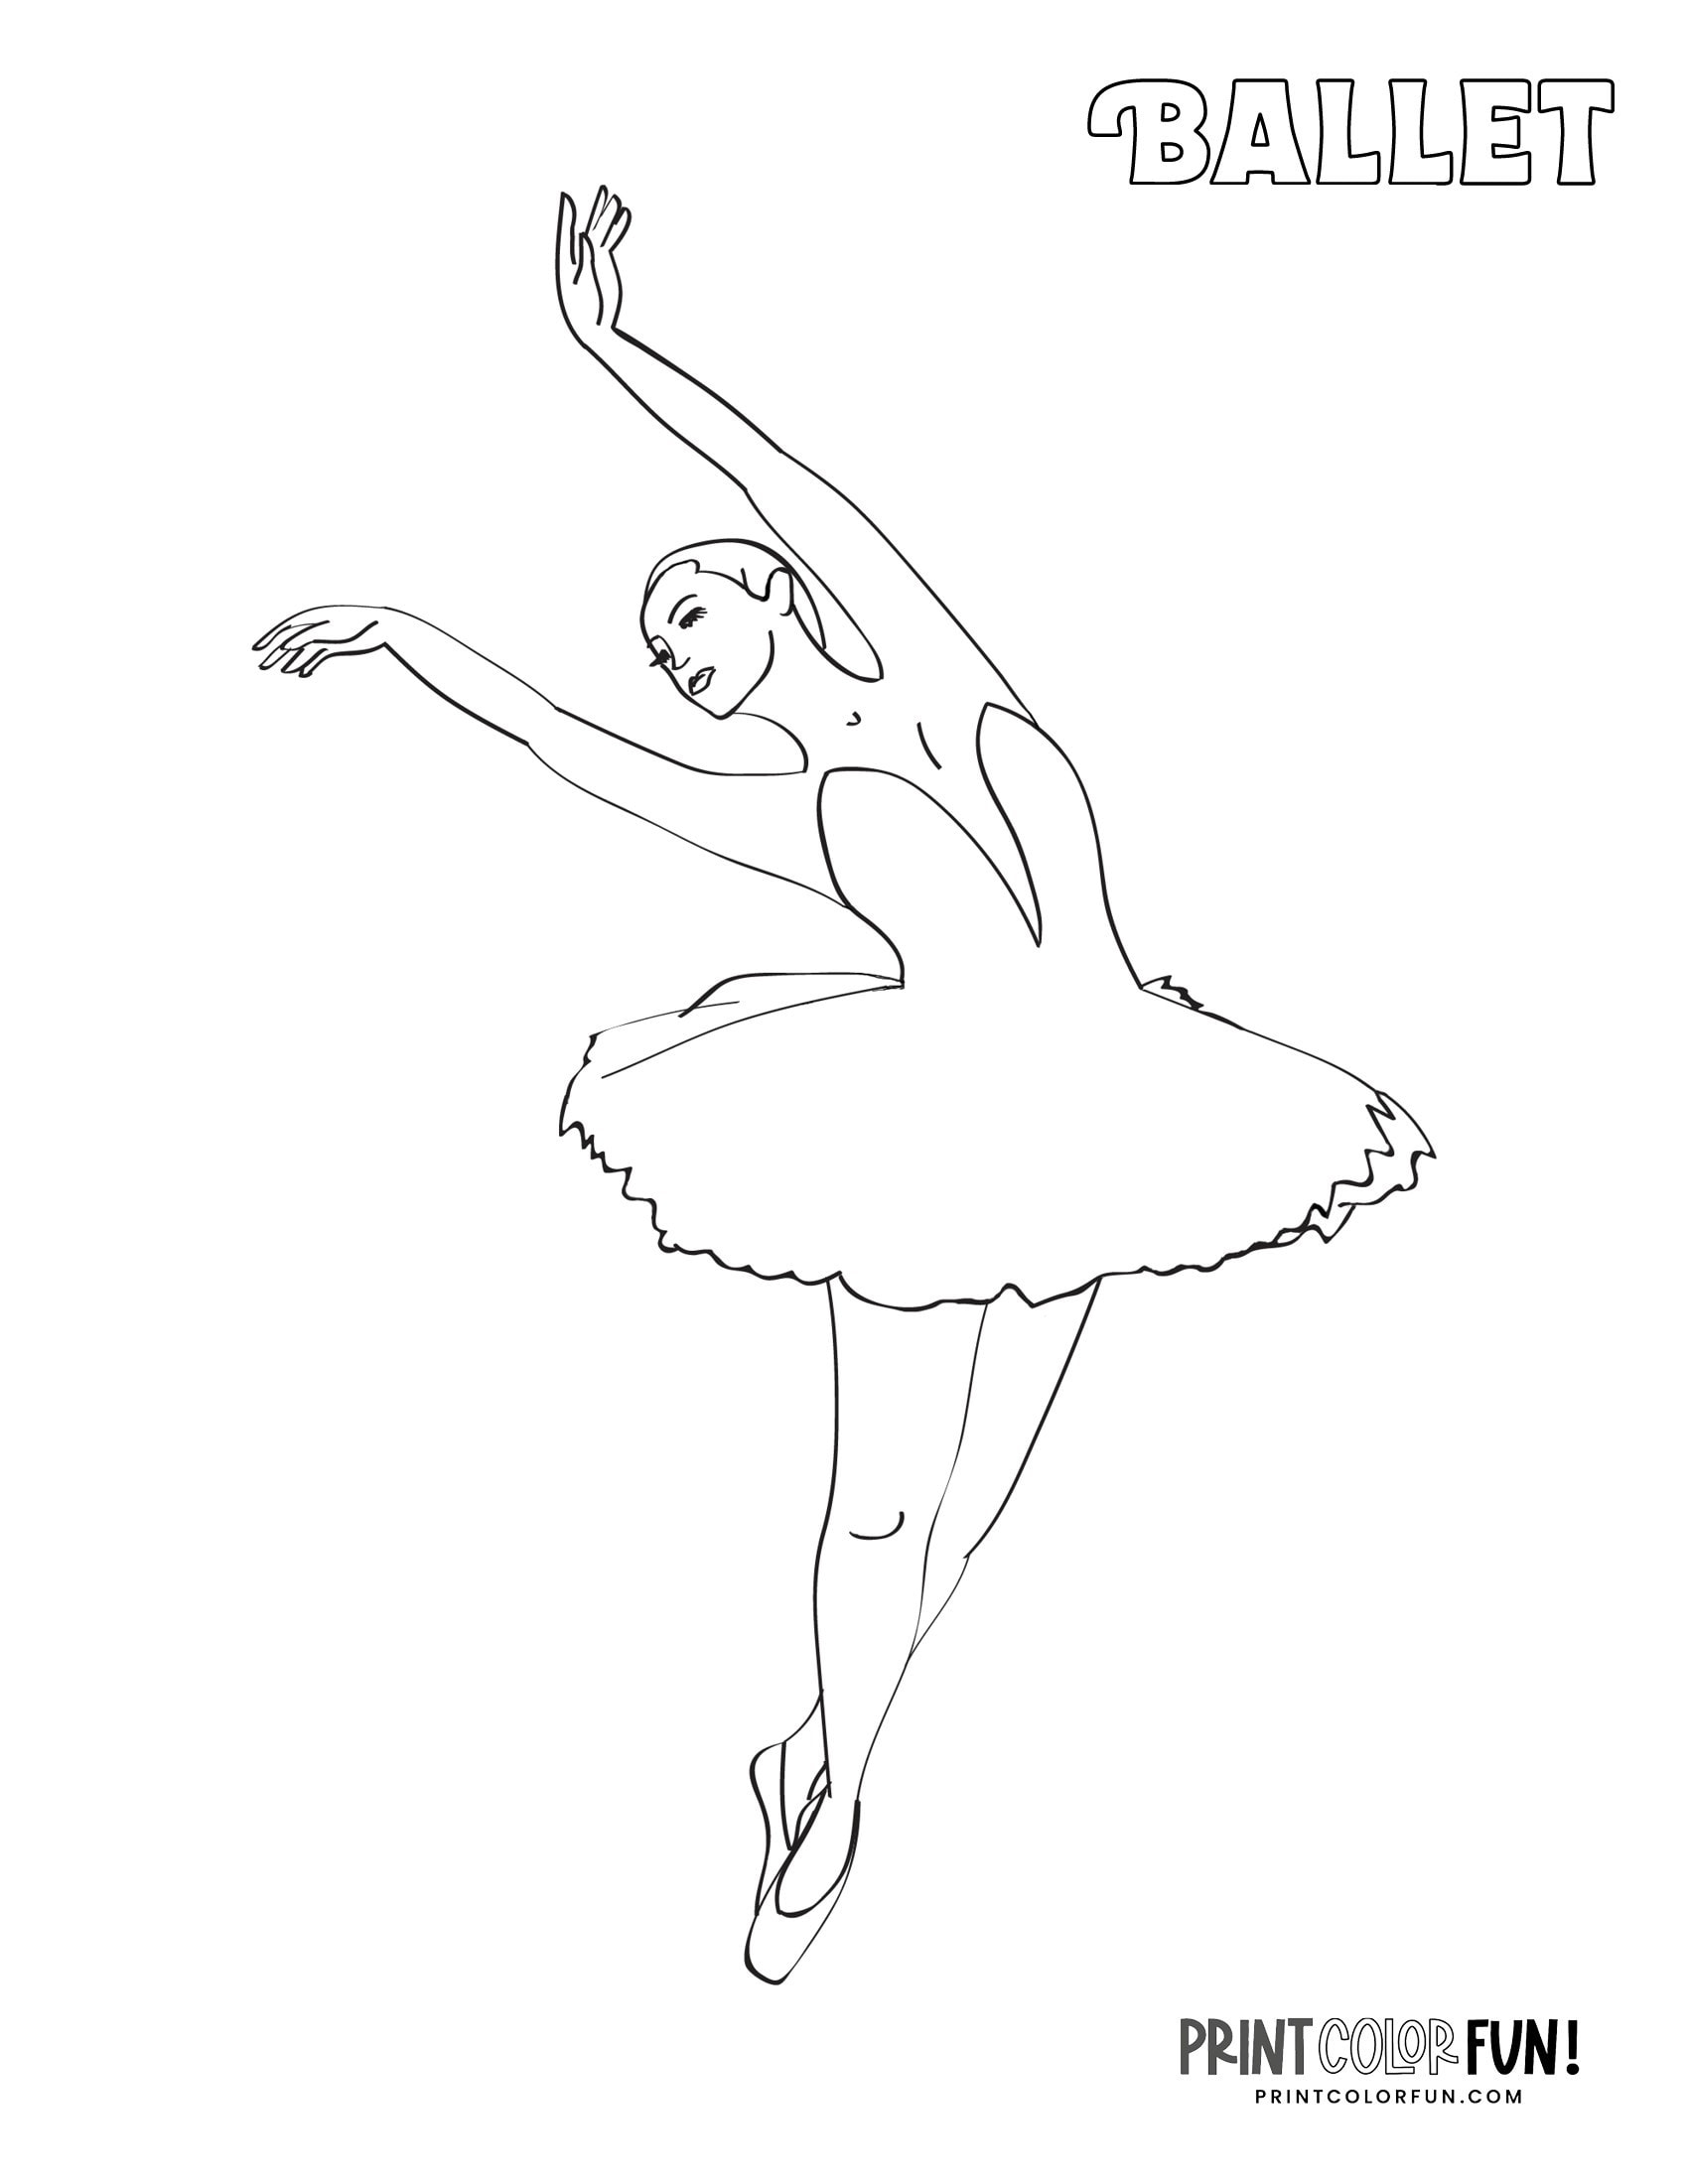 6 beautiful ballerina coloring pages - Print Color Fun!